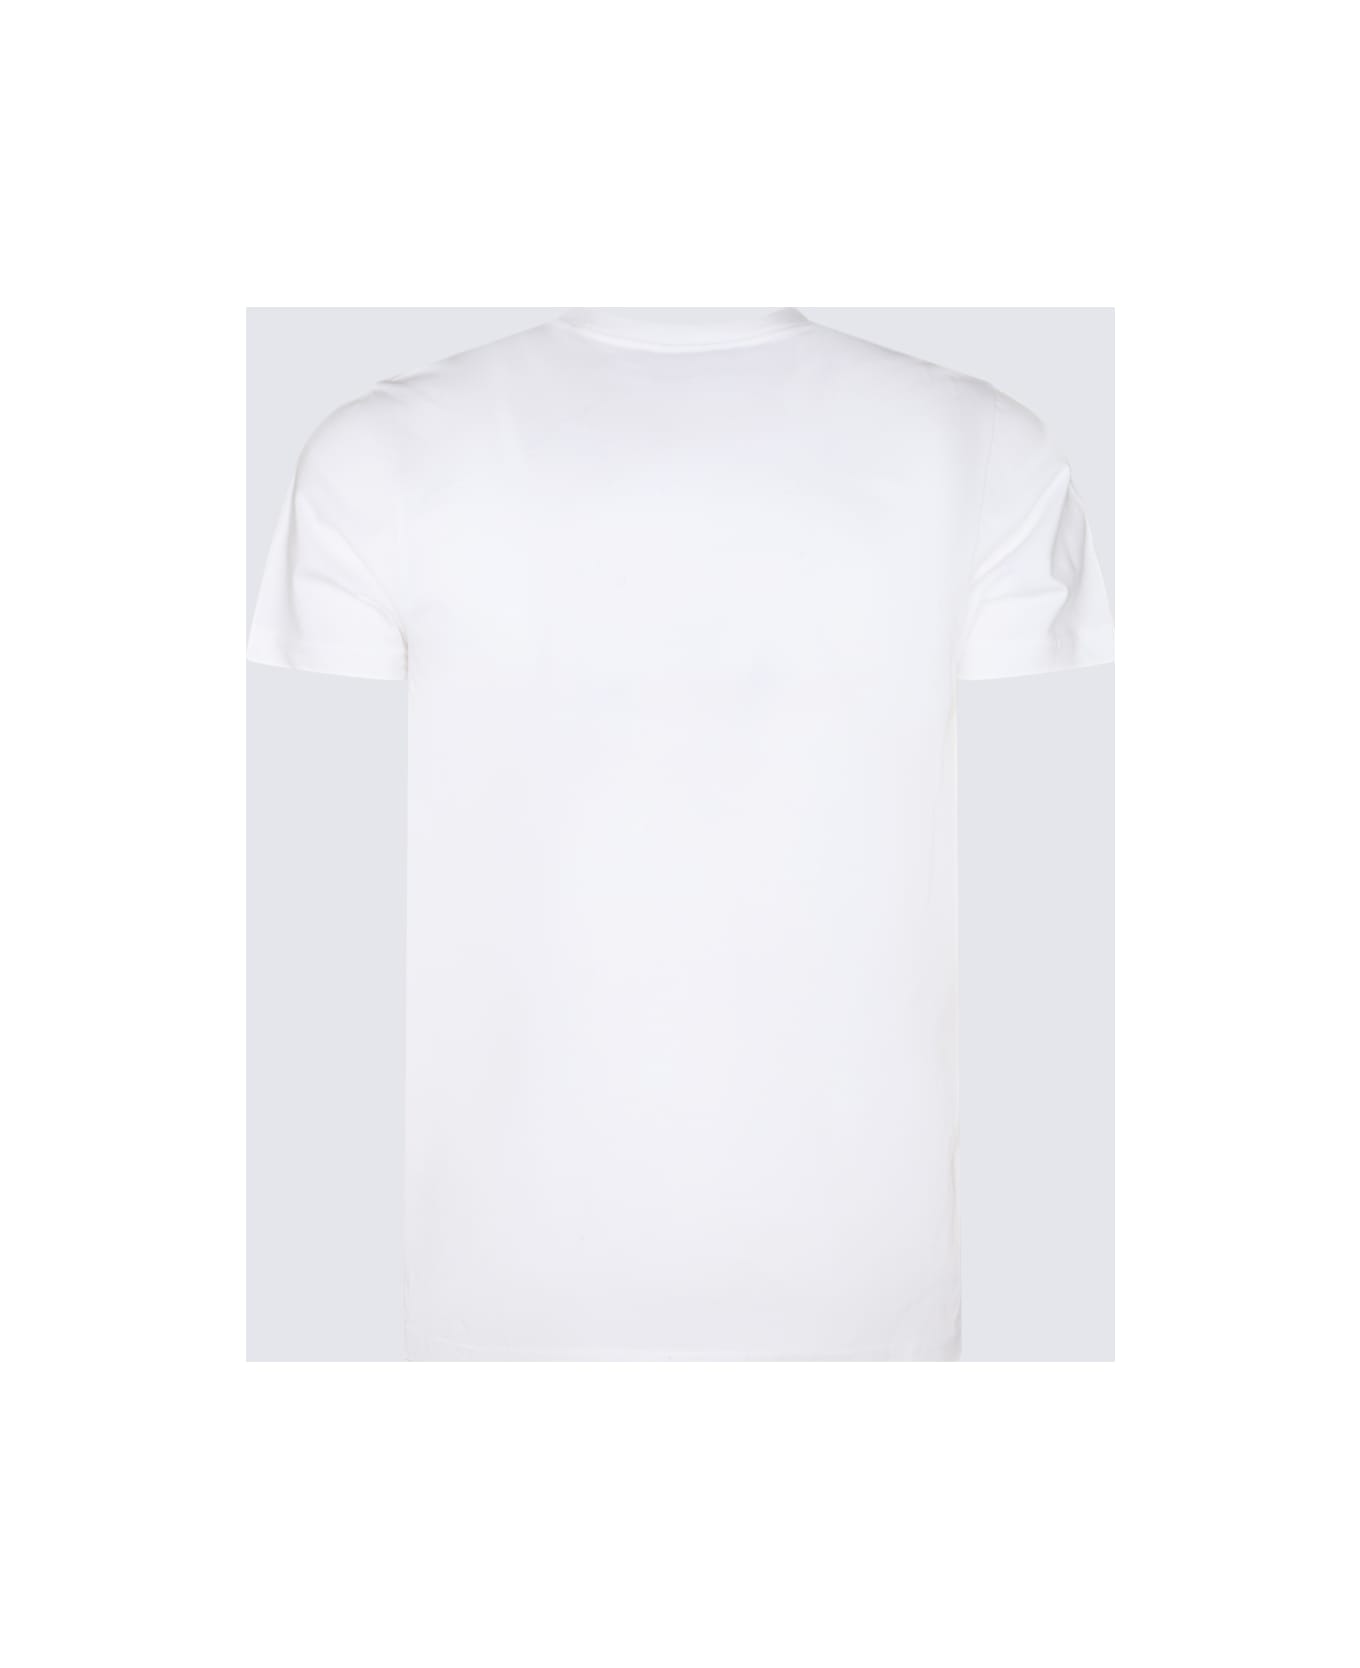 Paul Smith White Cotton T-shirt - White シャツ